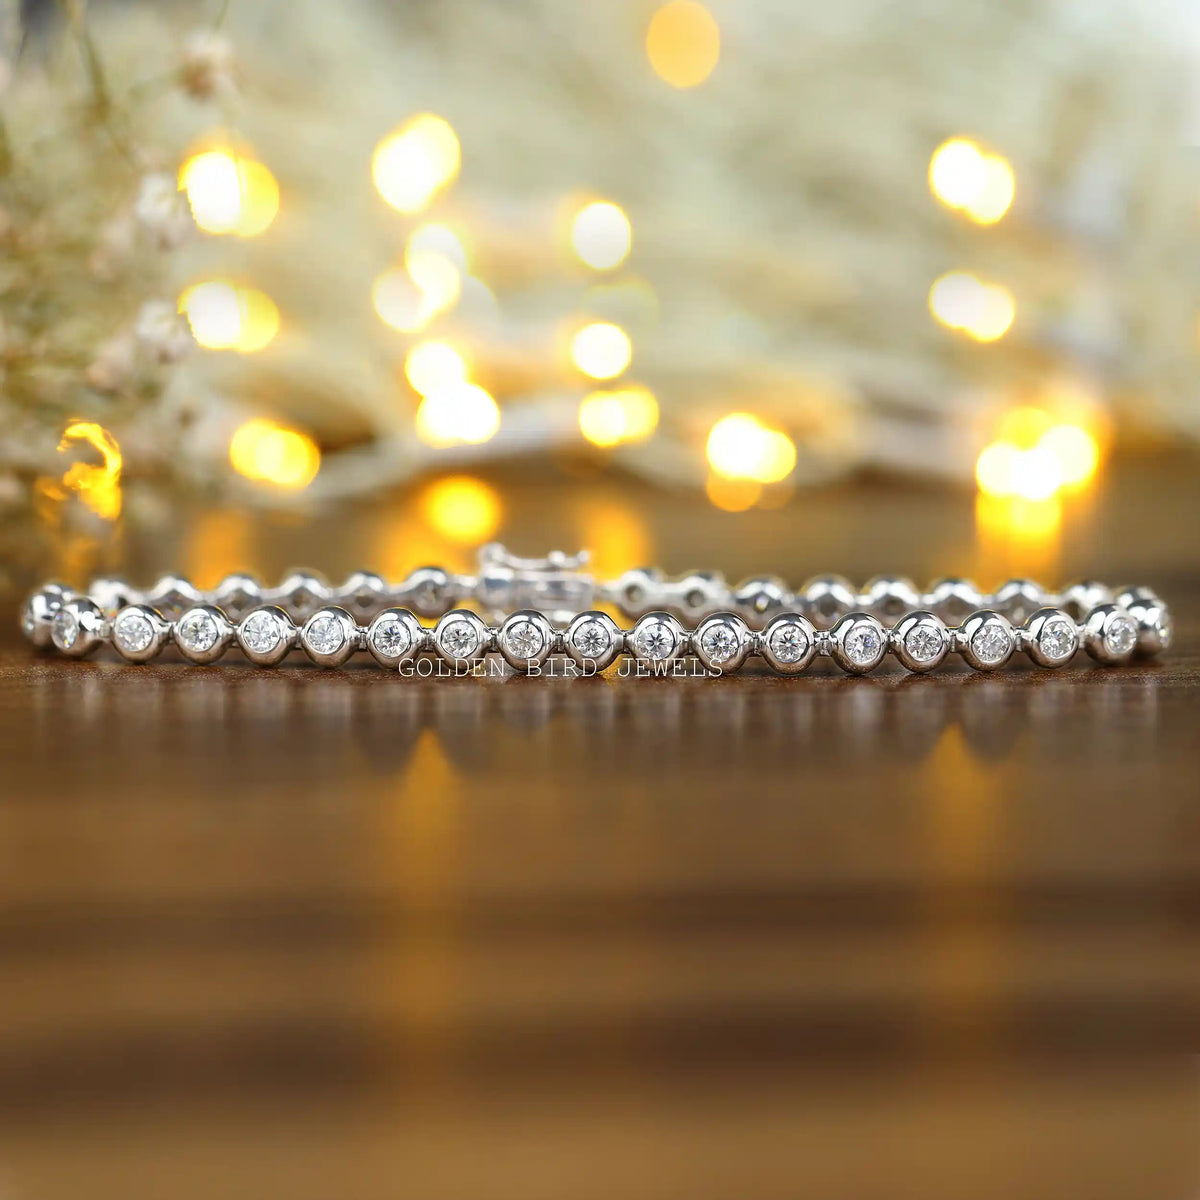 [Front view of moissanite round cut bezel set bracelet in 14k white gold]-[Golden Bird Jewels]